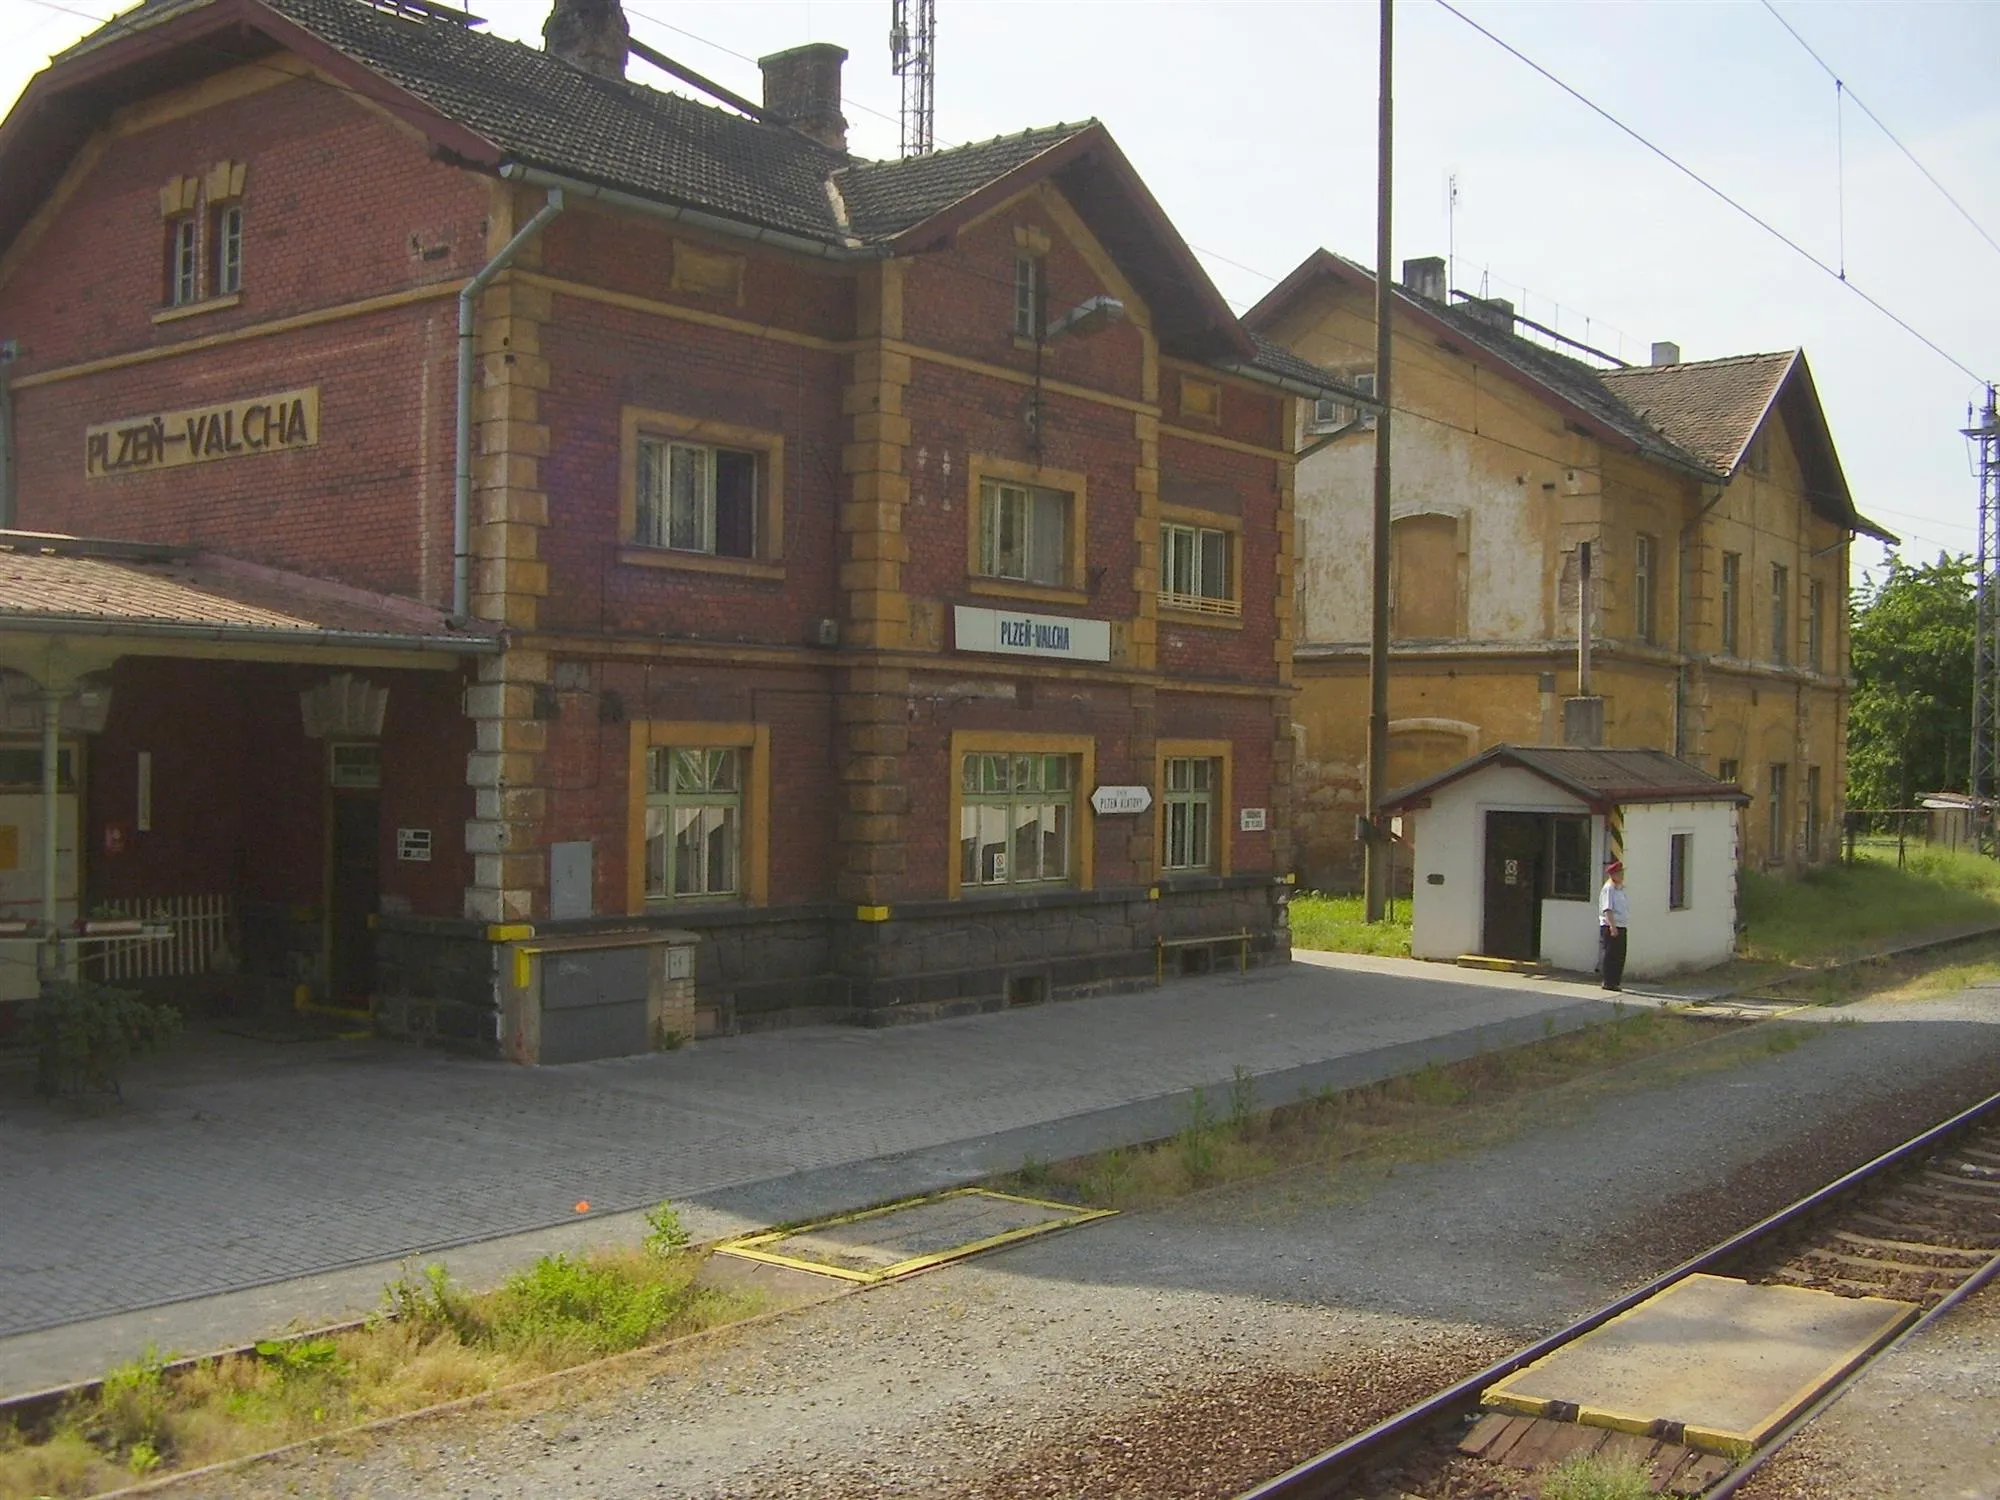 Photo showing: Train station Plzeň-Valcha